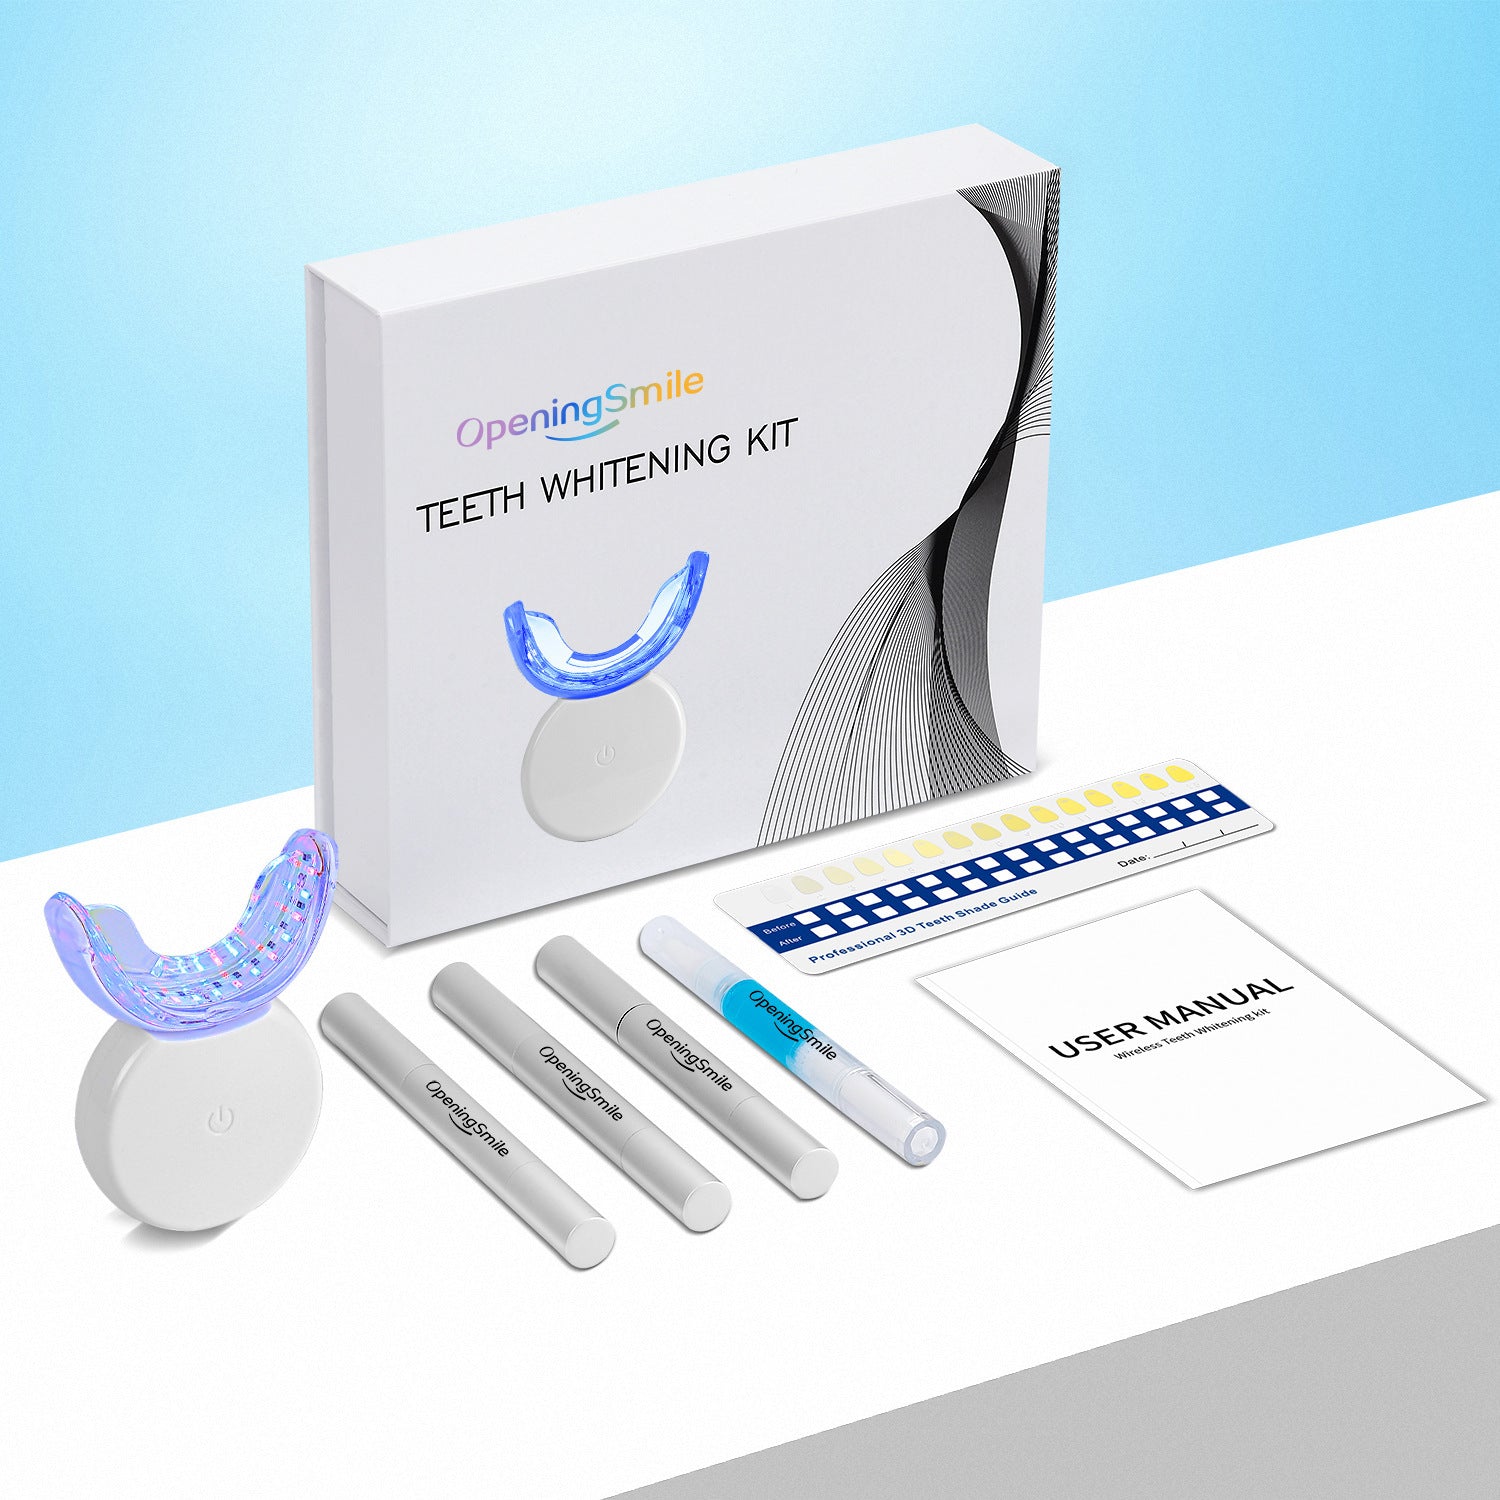 Home teeth whitening kits